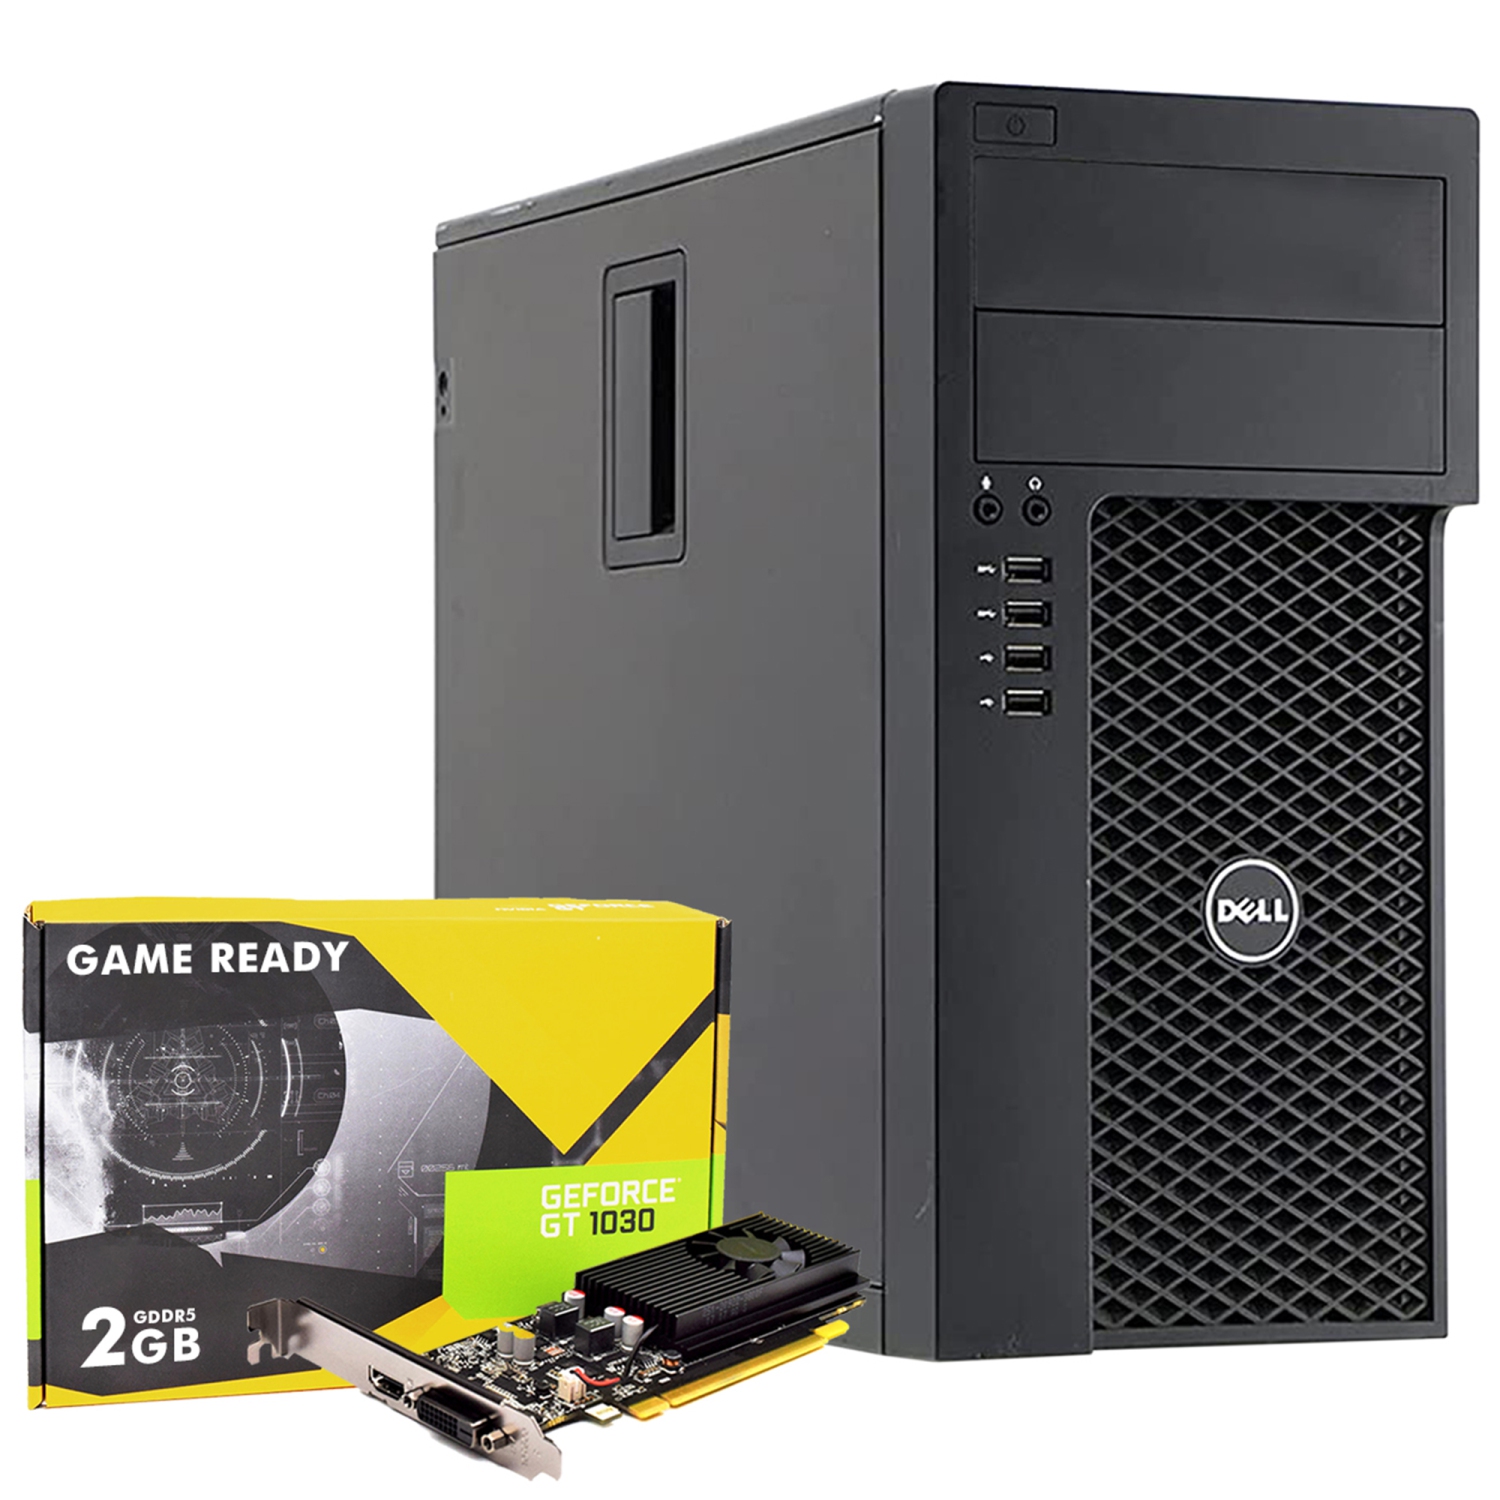 Refurbished (Good) - Dell Precision T1700 Tower Gaming Desktop Computer PC, (Core i7 - 4770 4th GEN/16GB RAM/256GB SSD/GT 1030/WINDOWS 10 PRO) Intel Processor - Black